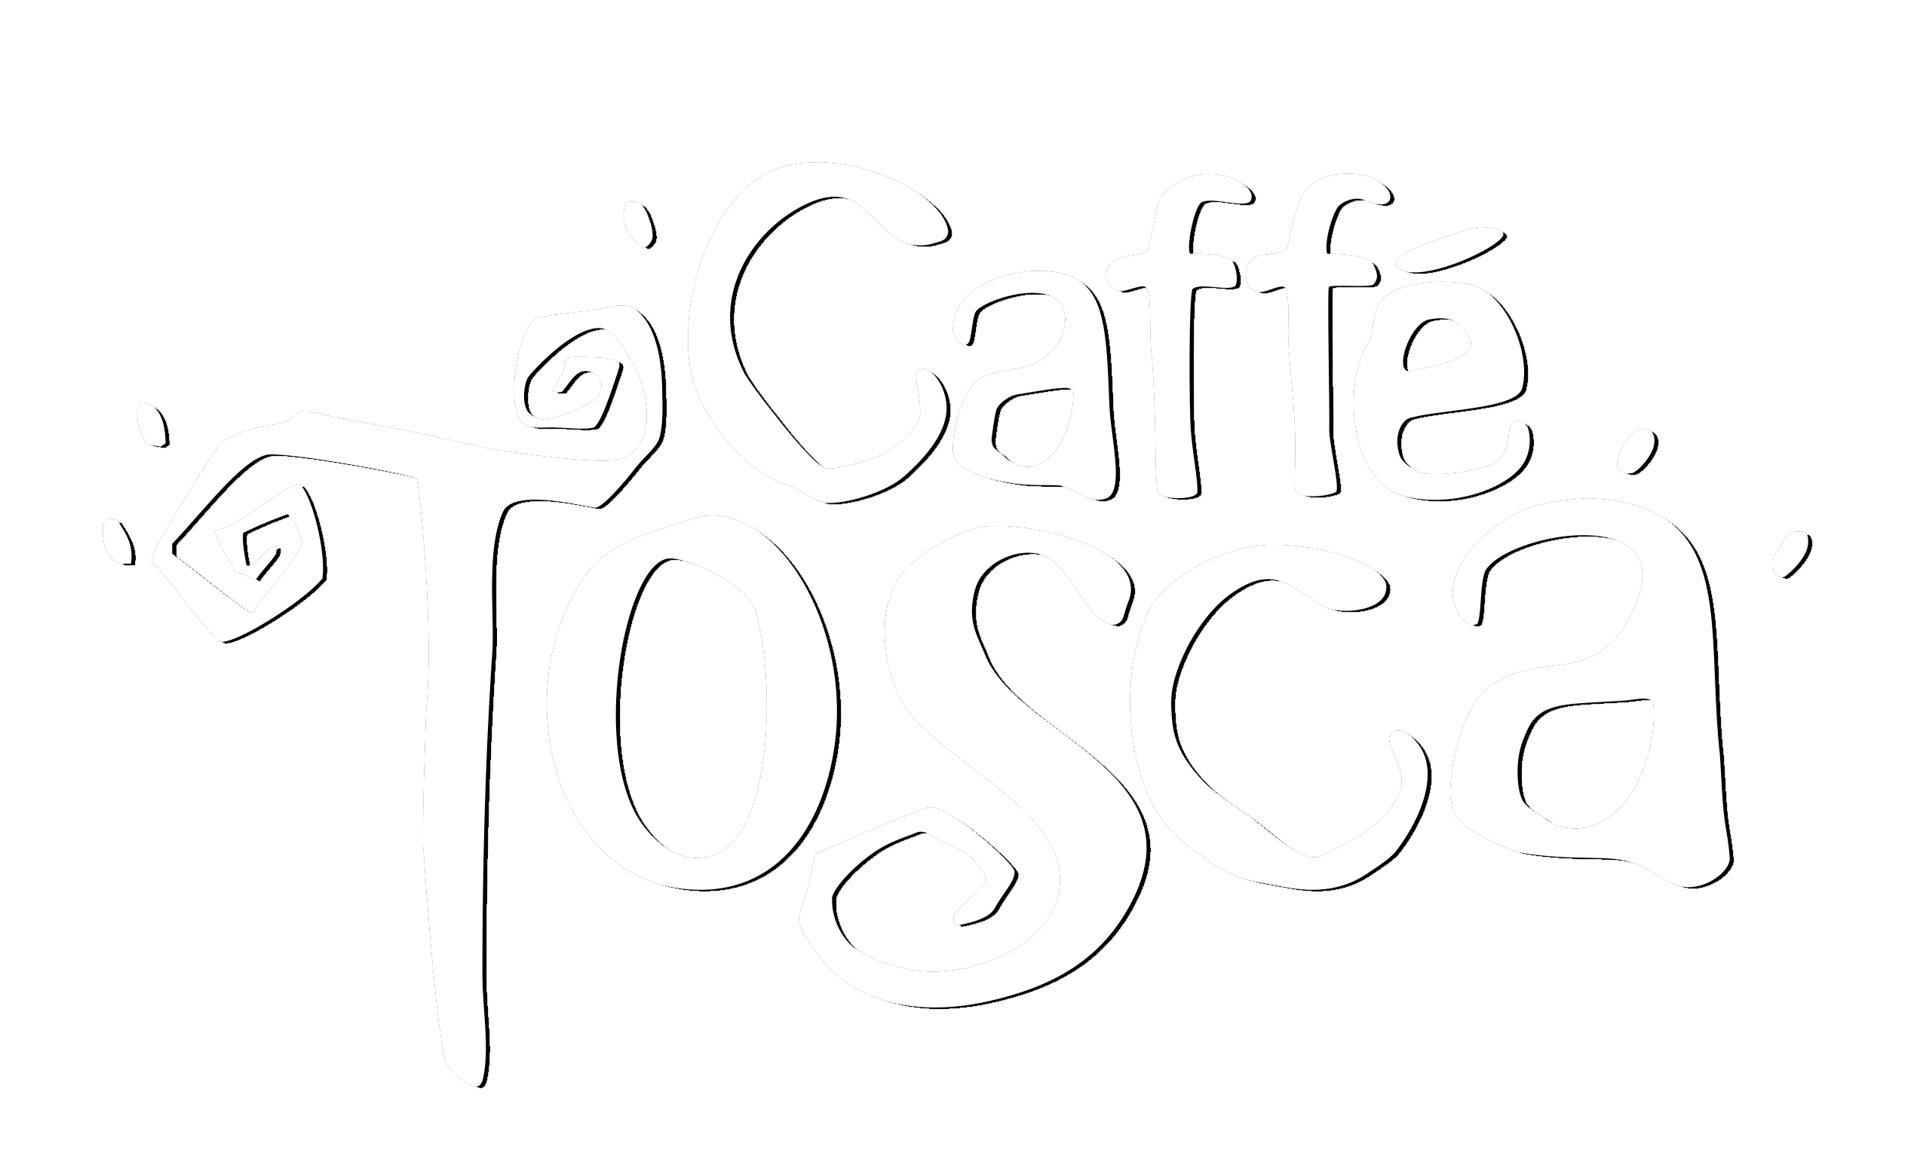 Caffe Tosca